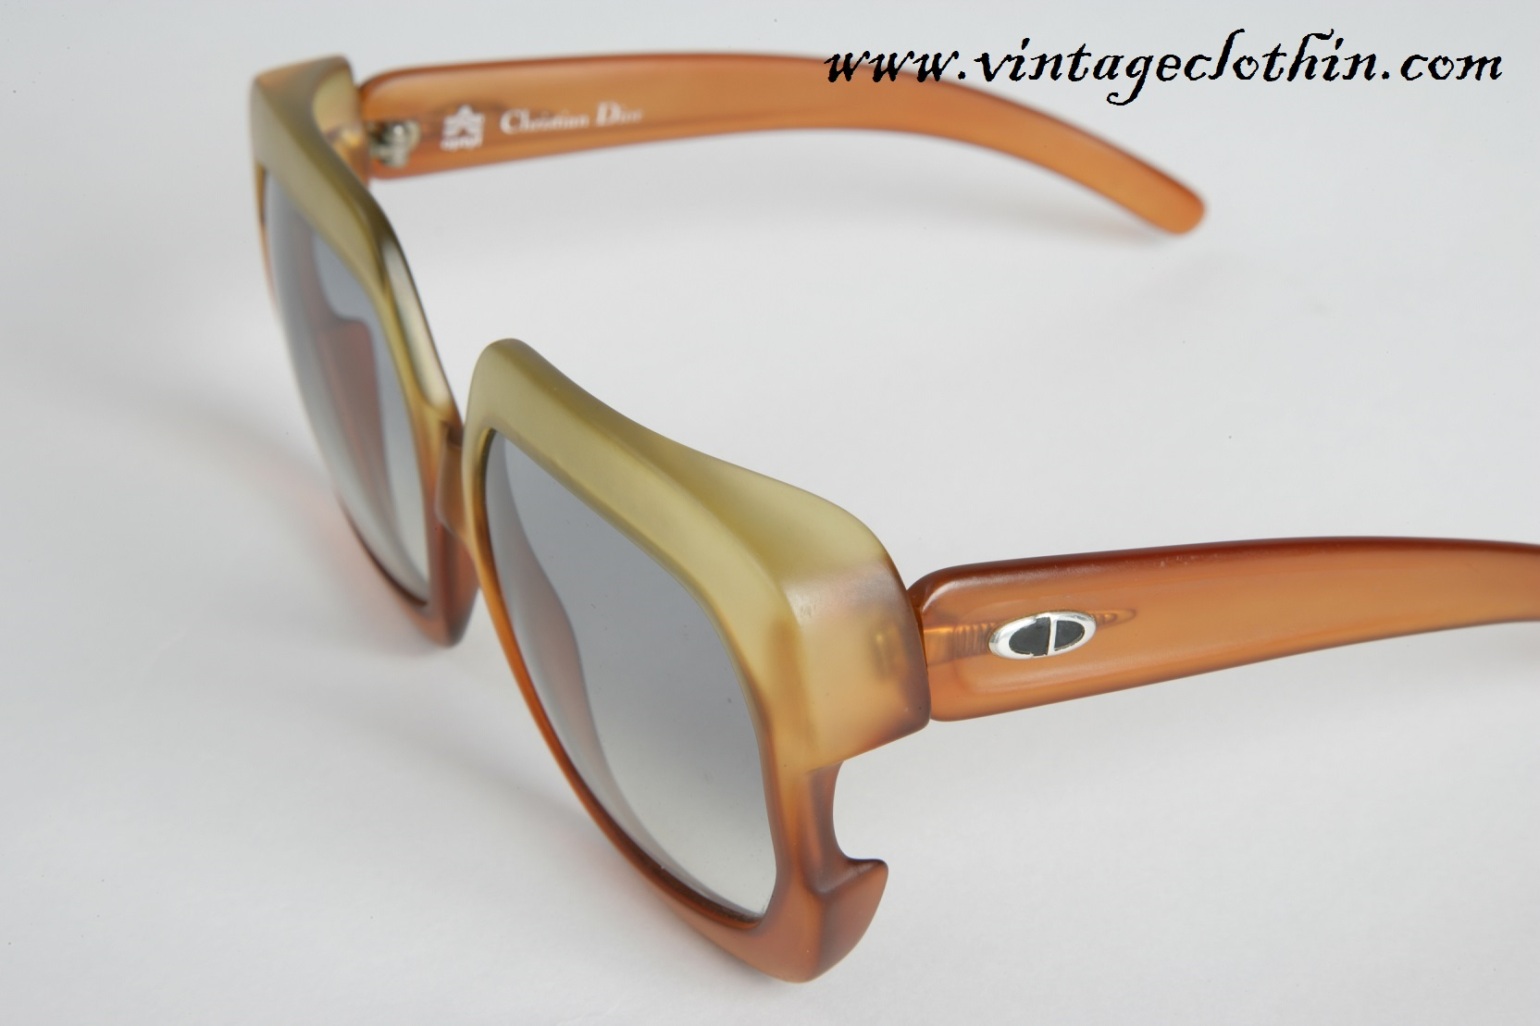 1970s Christian Dior Sunglasses, Christian Dior sunglasses, sunglasses, vintage sunglasses, Dior, Dior sunglasses, 1970s sunglasses, 1970s, 70s sunglasses,